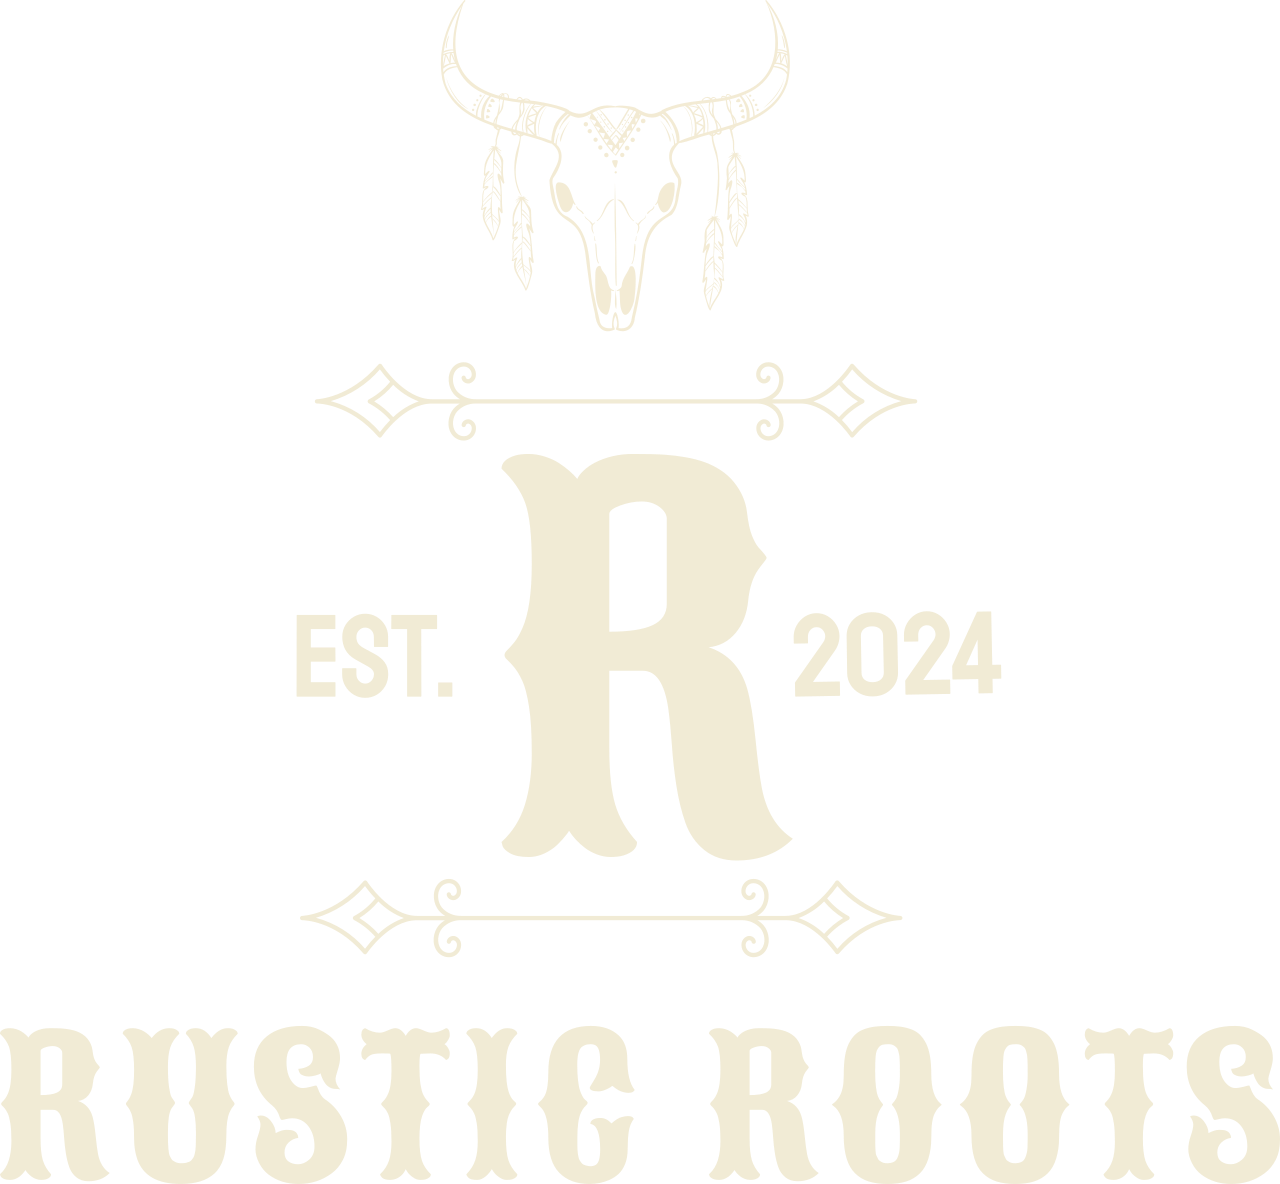 Rustic Roots's logo